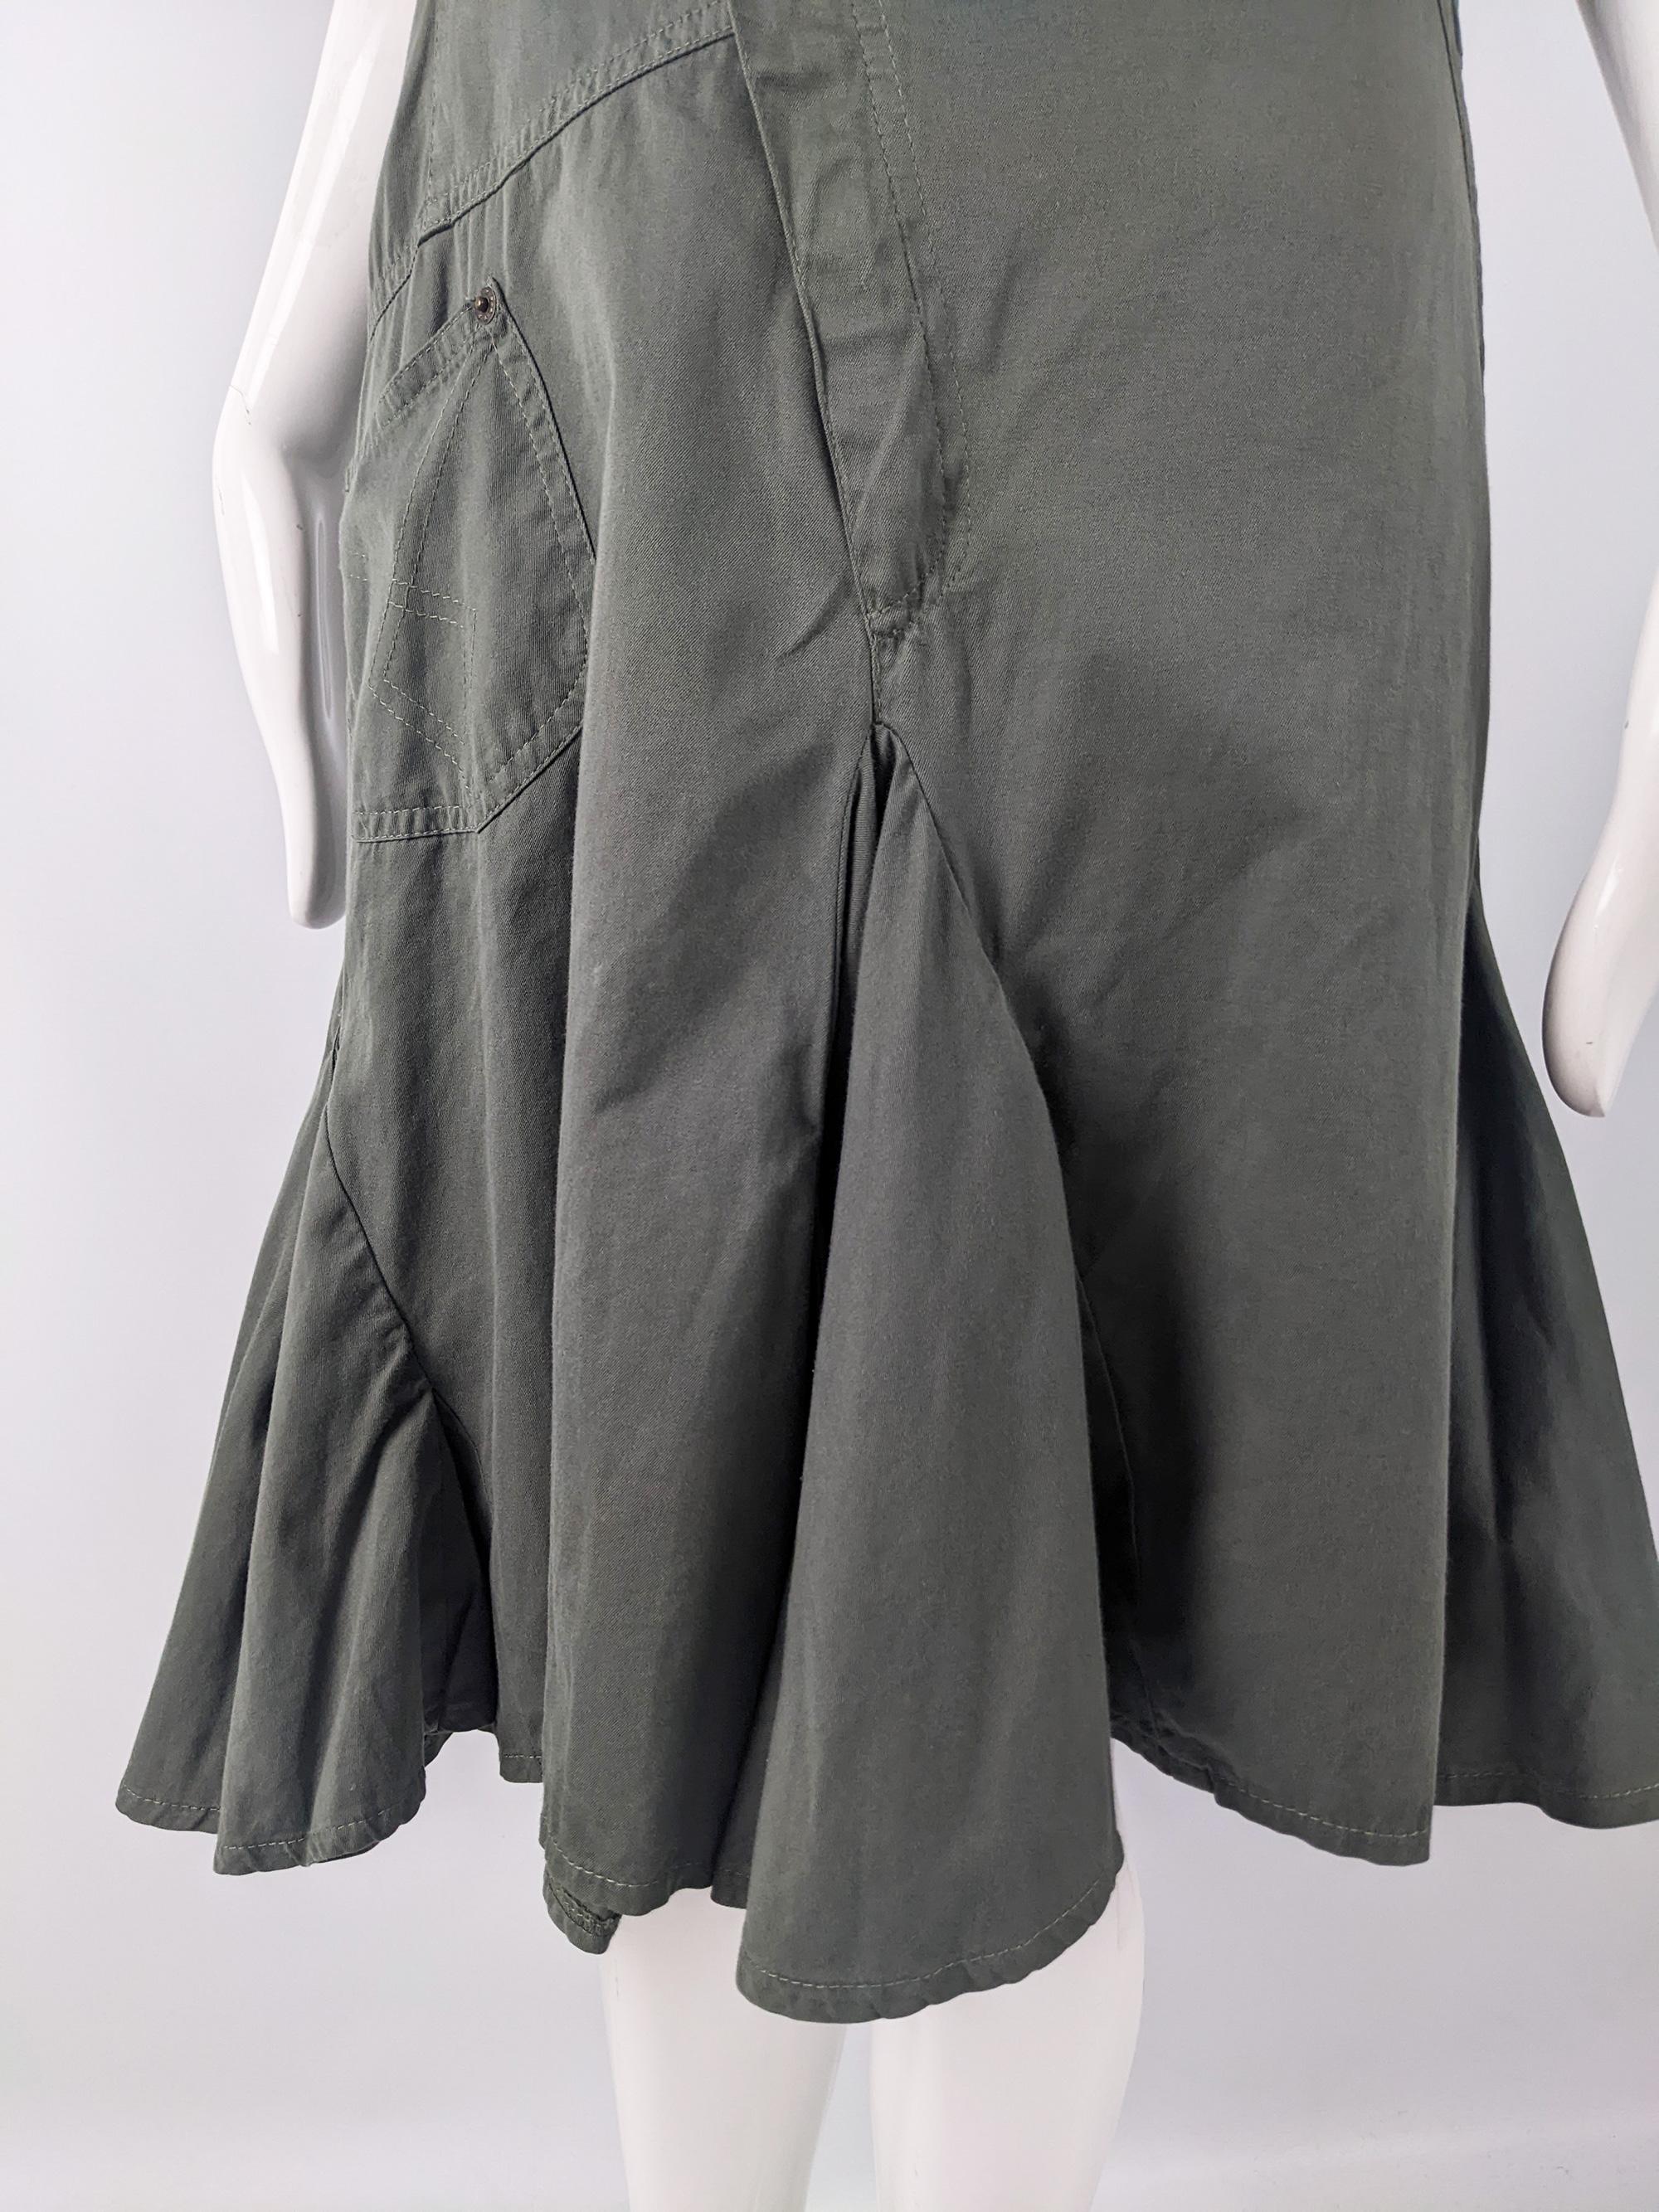 Plein Sud Jeans Vintage Khaki Green Asymmetric Avant Garde Dress, 1990s In Excellent Condition For Sale In Doncaster, South Yorkshire